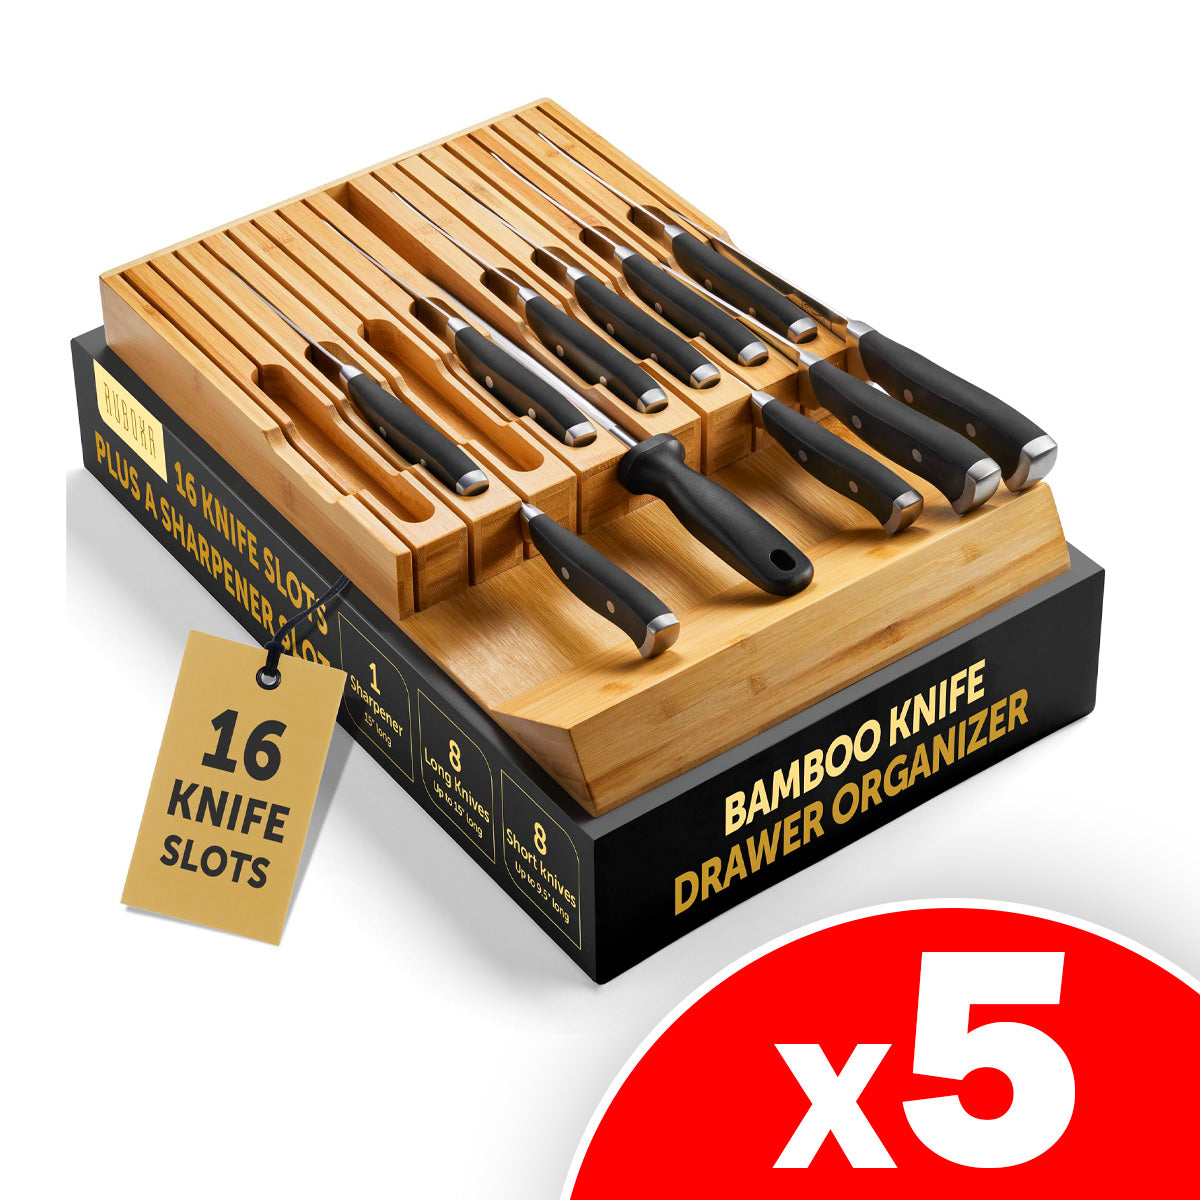 High-Grade 100% Bamboo Knife Drawer Organizer - 16 Knife Slots Plus a Sharpener Slot, 5 Pack